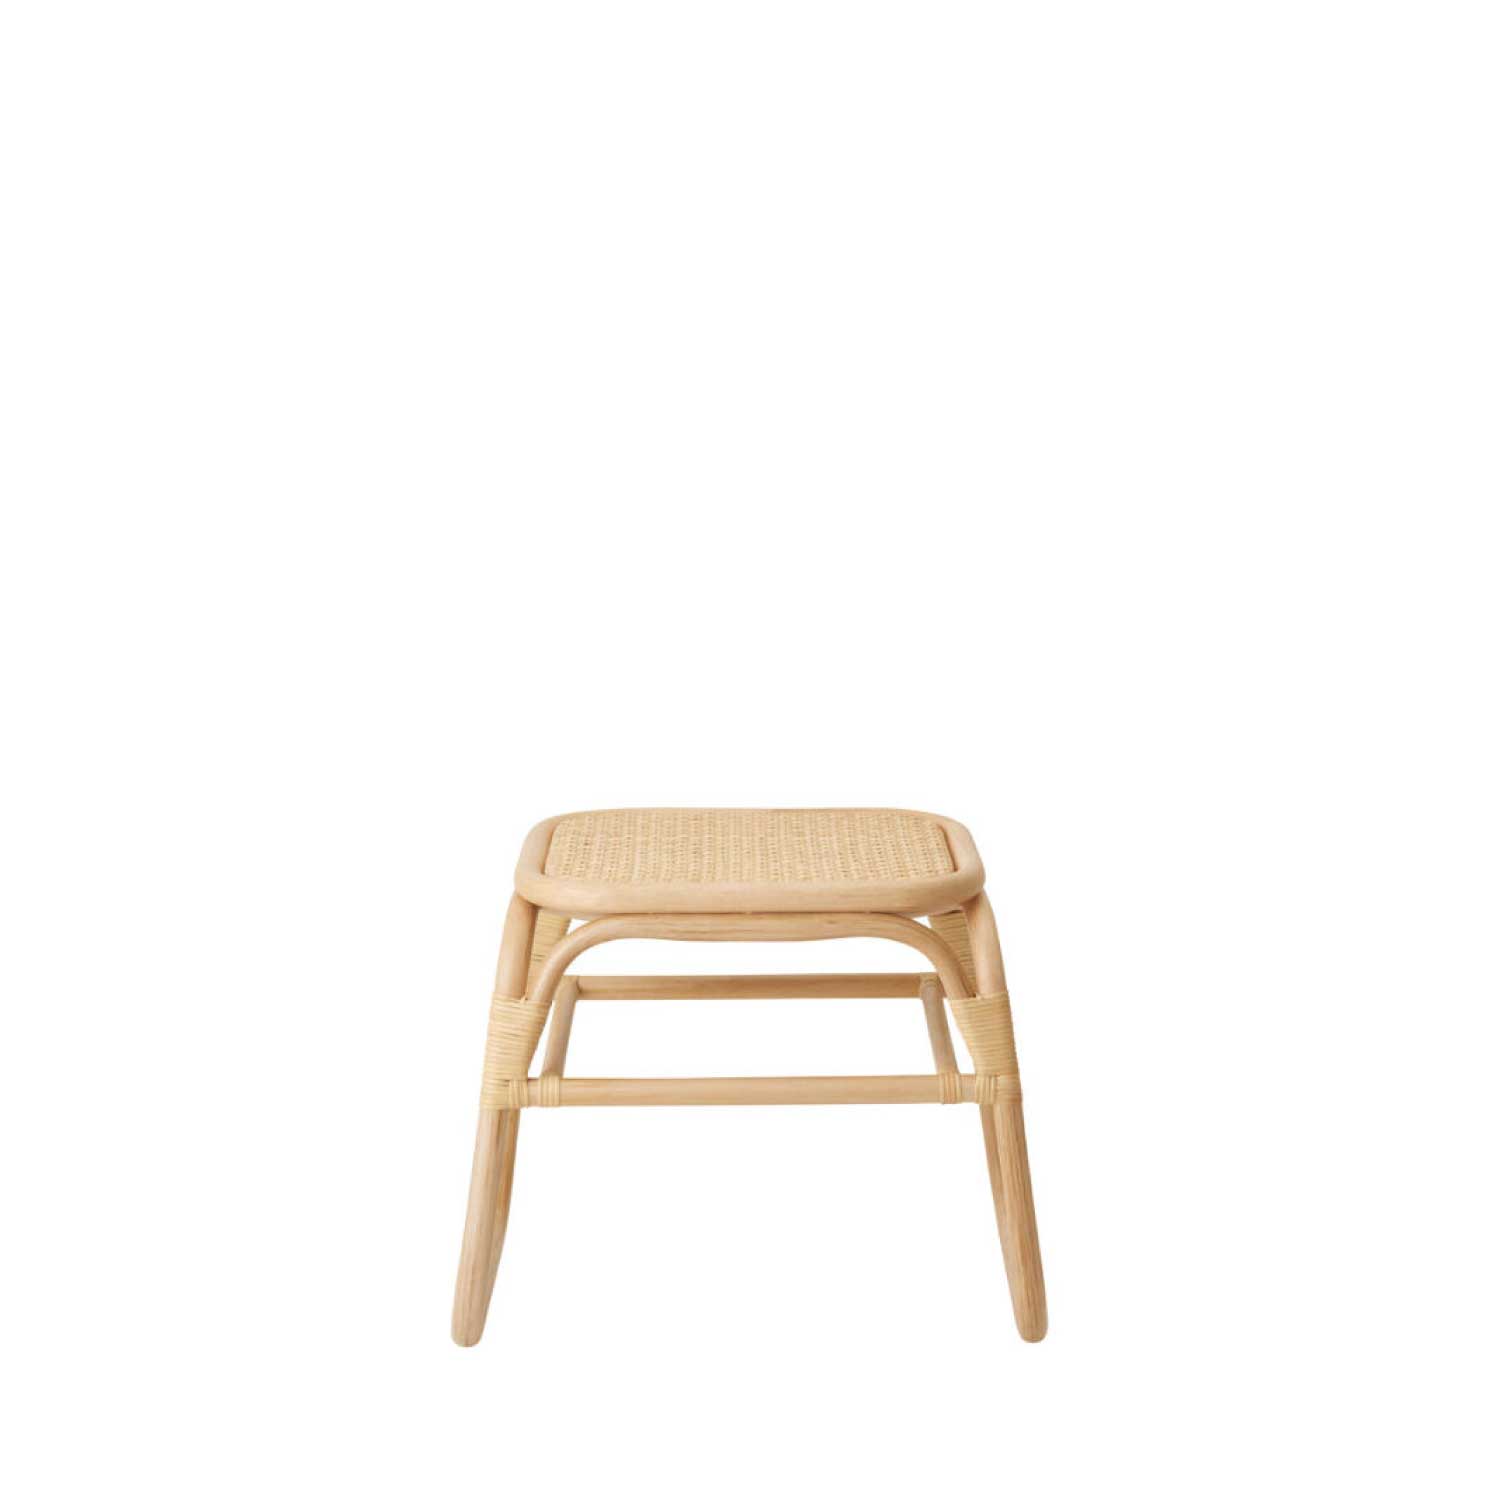 MR stool